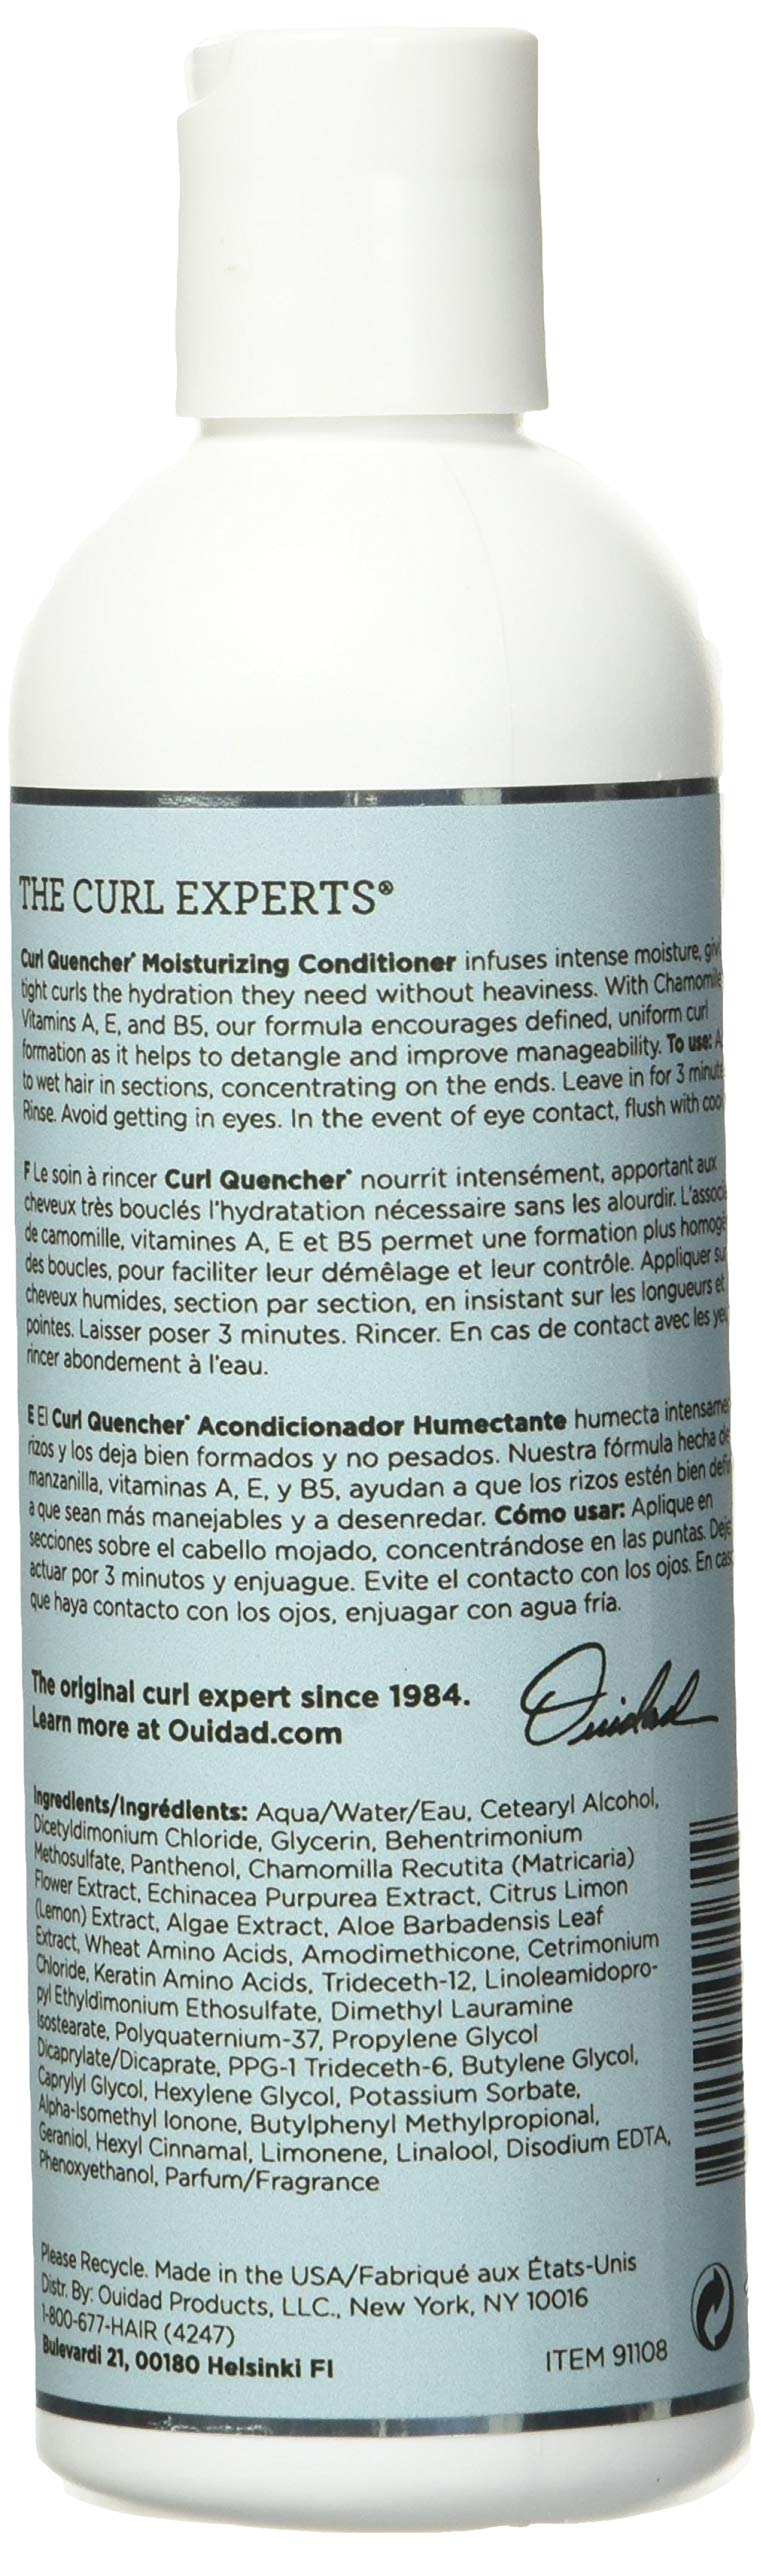 [Australia] - Ouidad Curl Quencher Moisturizing Conditioner, 8.5 Fl oz 